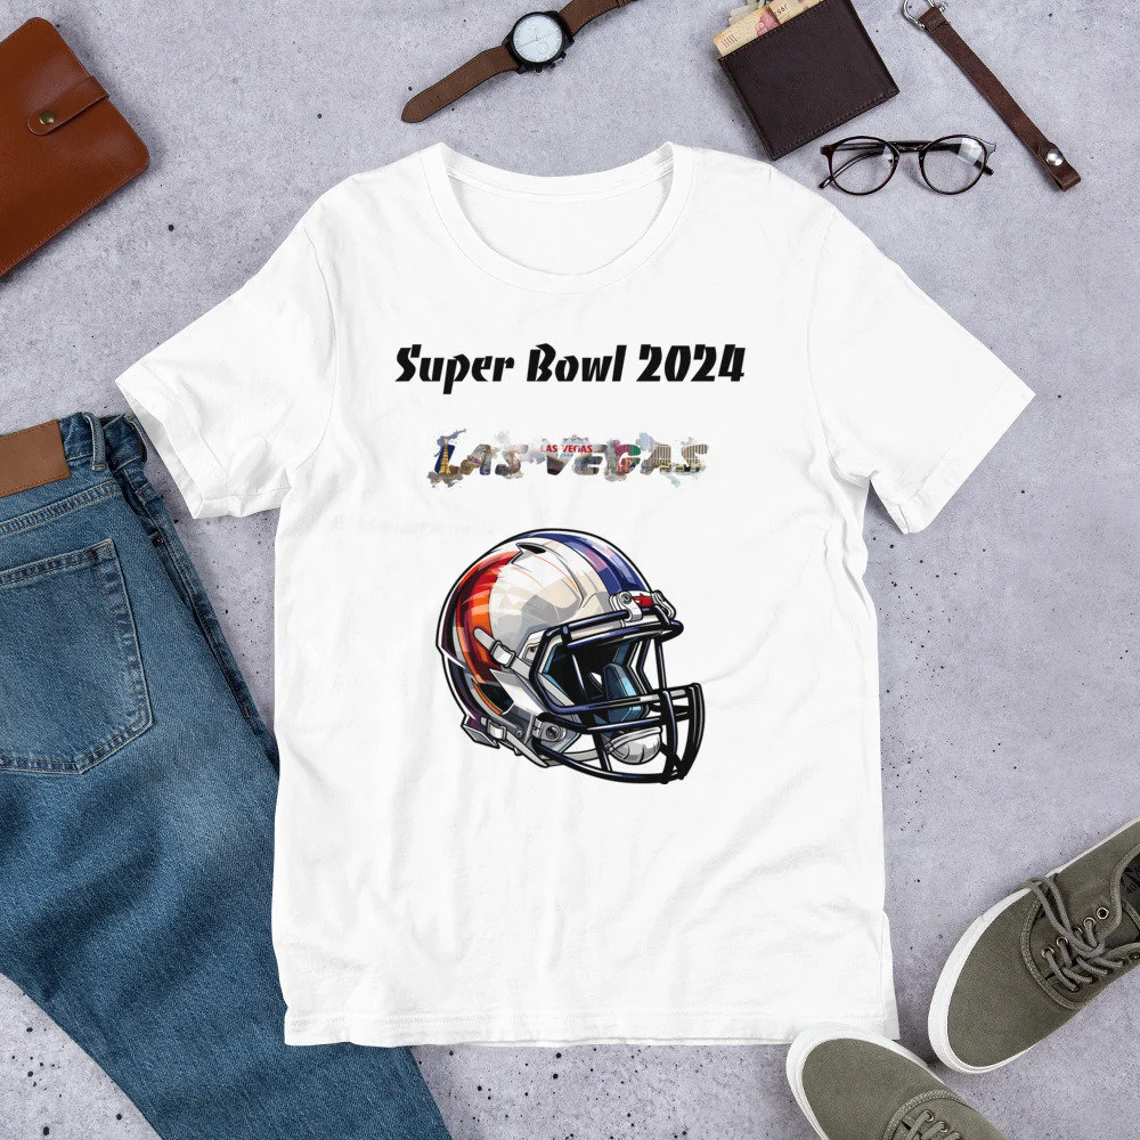 Super Bowl 2024 Las Vegas t-shirt